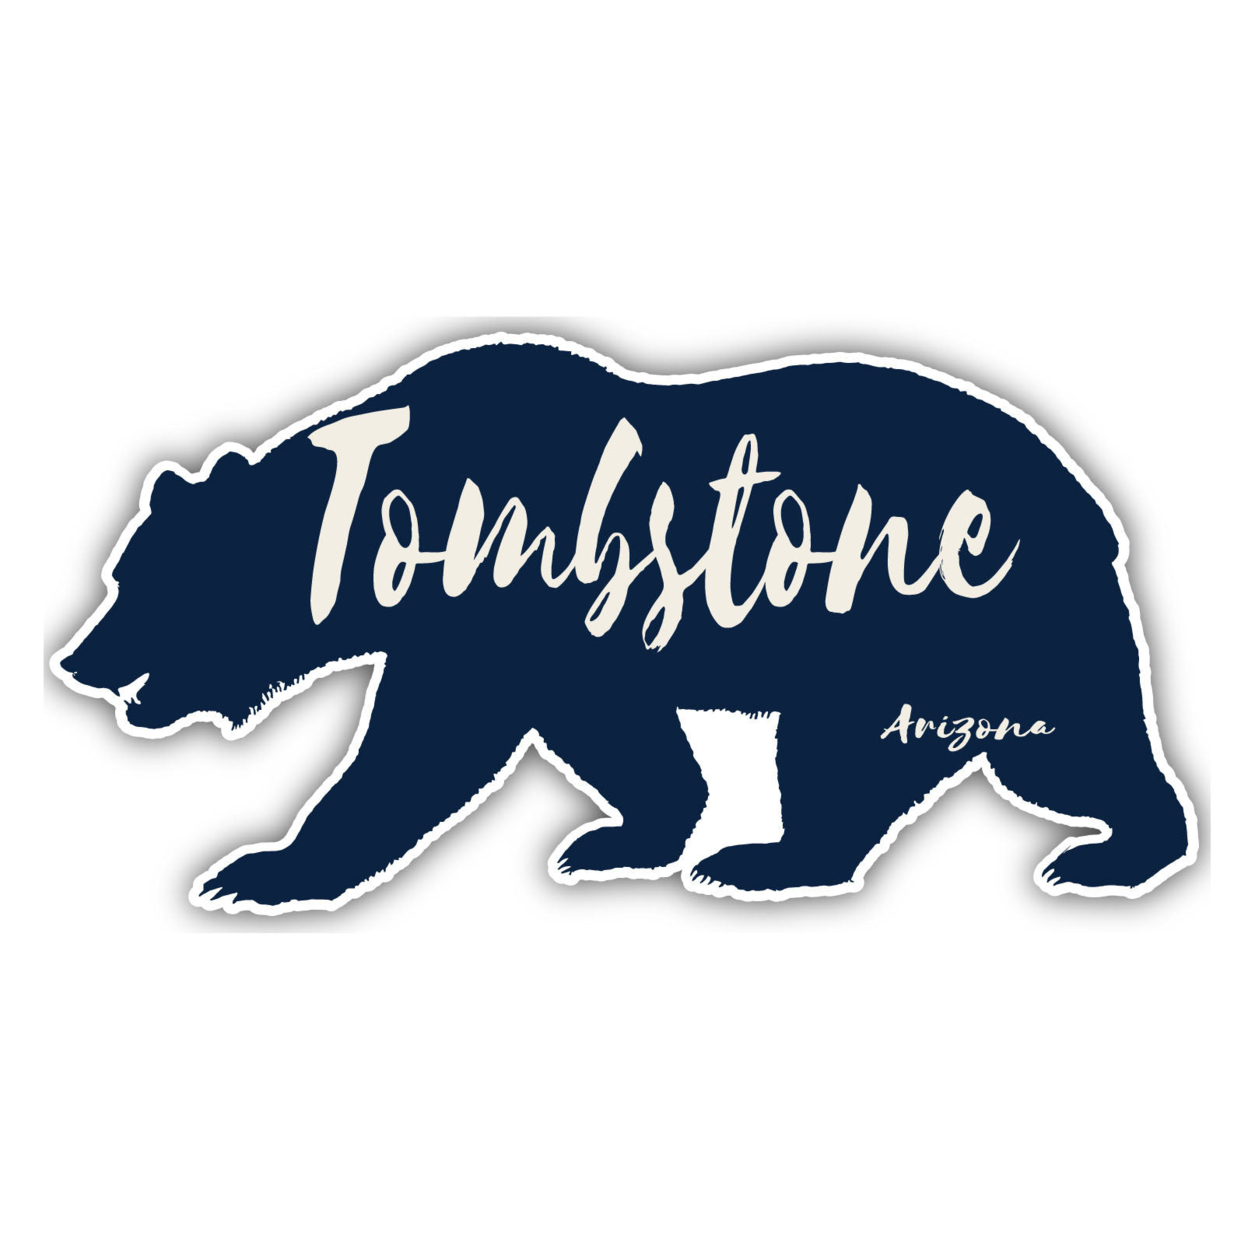 Tombstone Arizona Souvenir Decorative Stickers (Choose Theme And Size) - Single Unit, 2-Inch, Tent